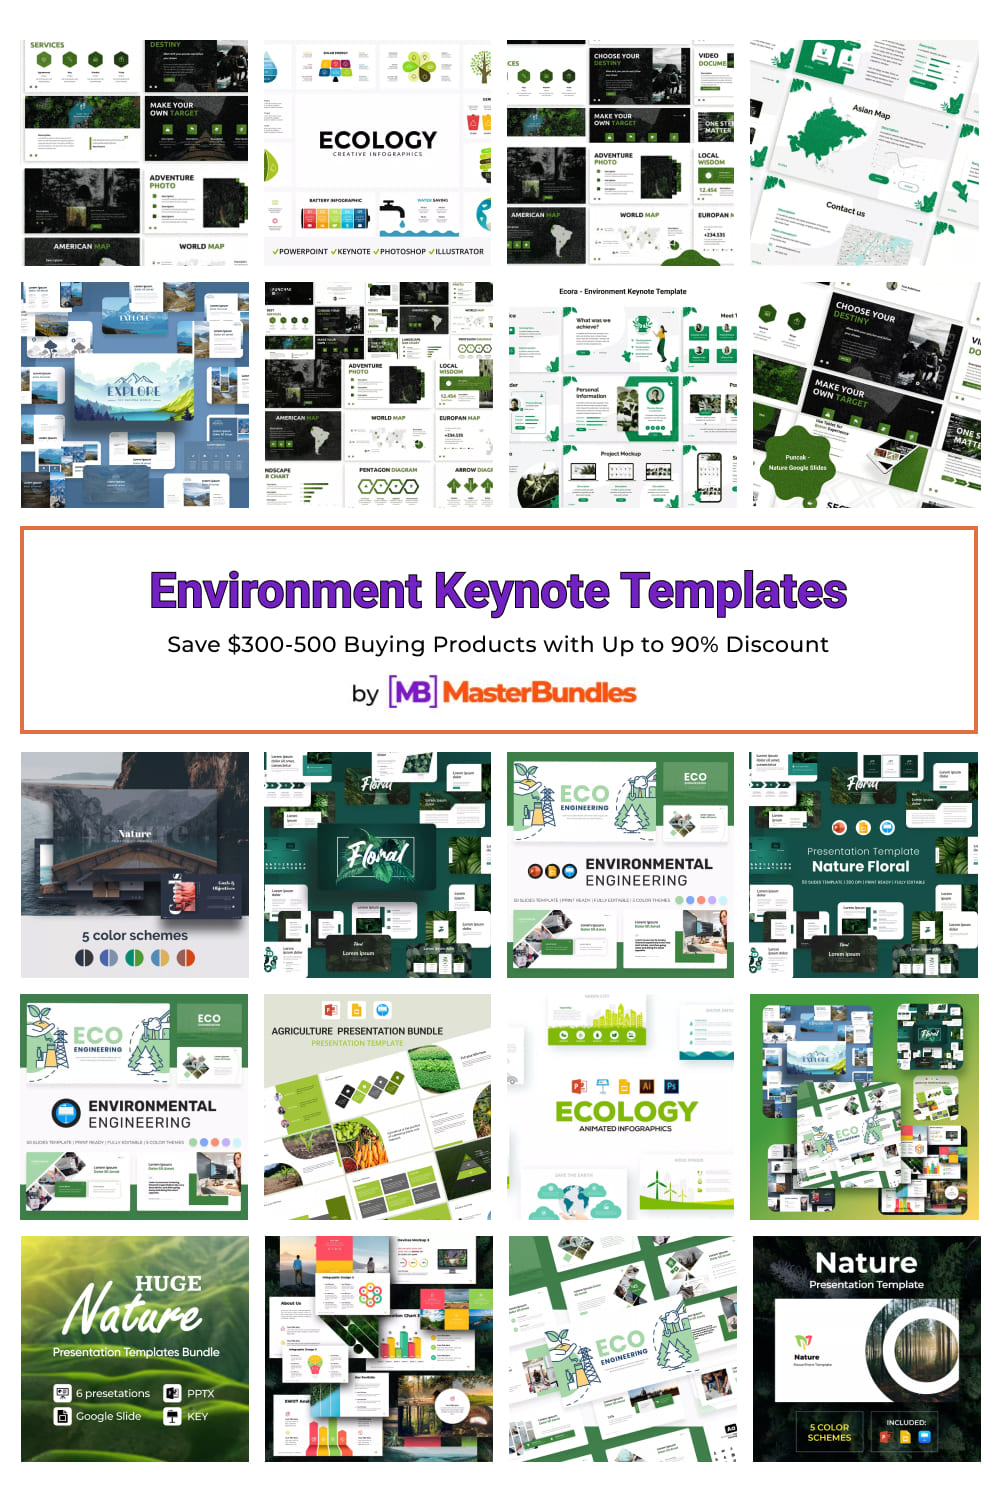 Environment Keynote Templates Pinterest image.